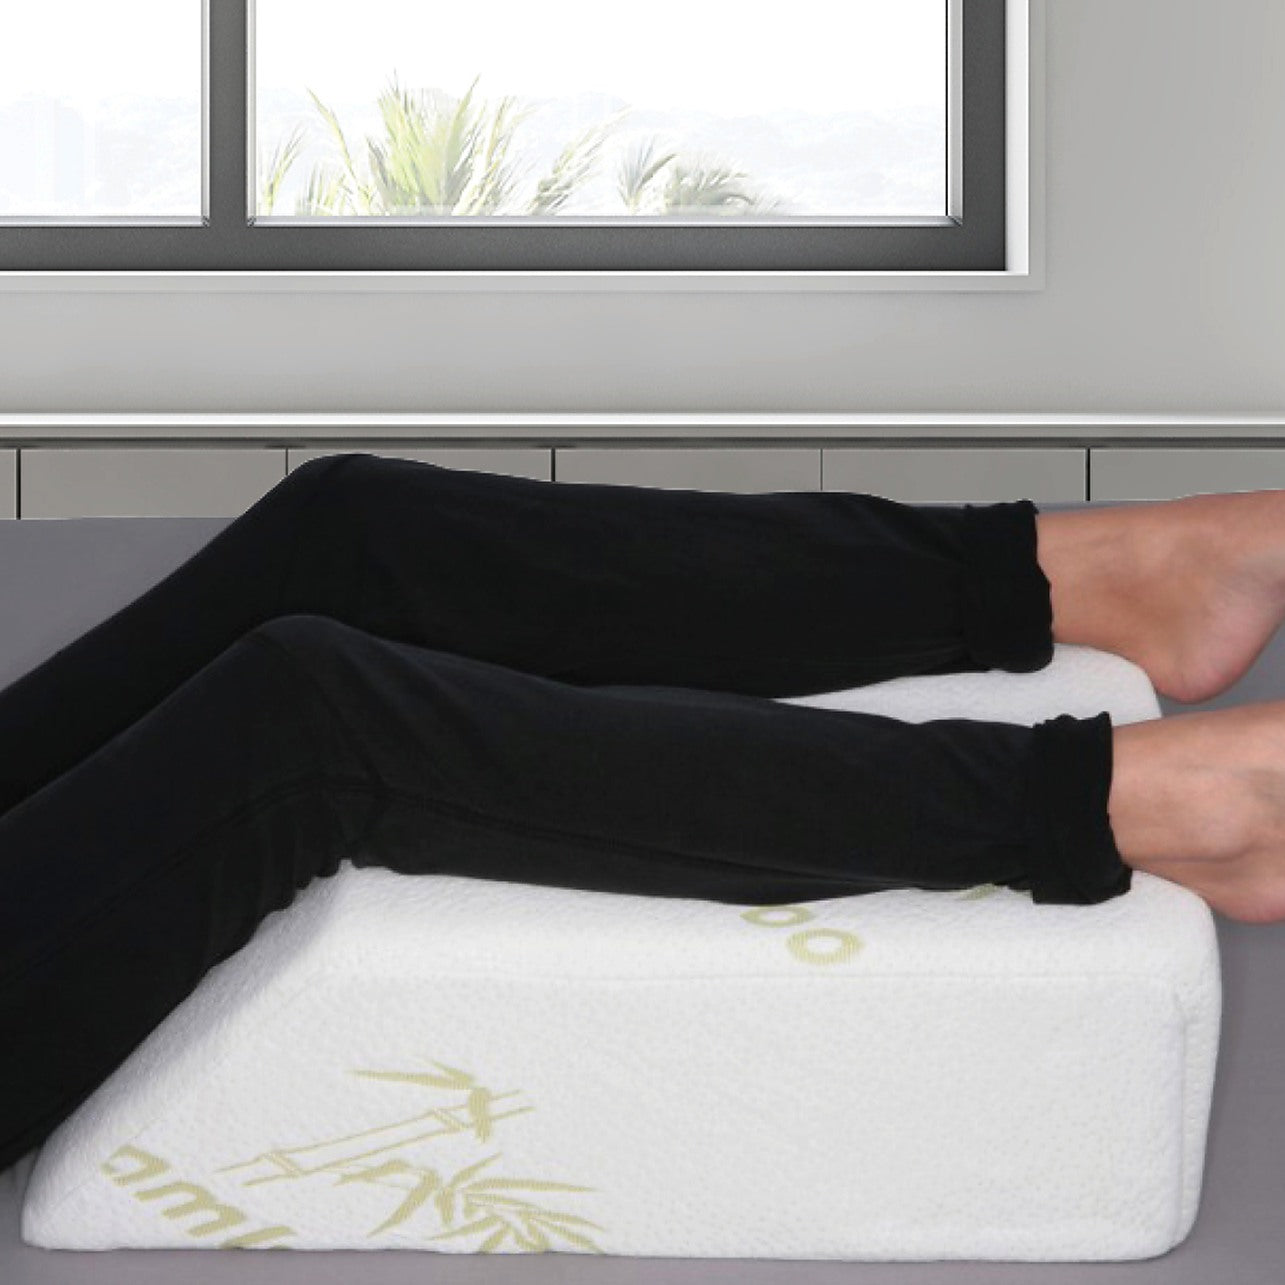 Leg Elevation Pillow Memory Foam Leg Elevating Support Wedge